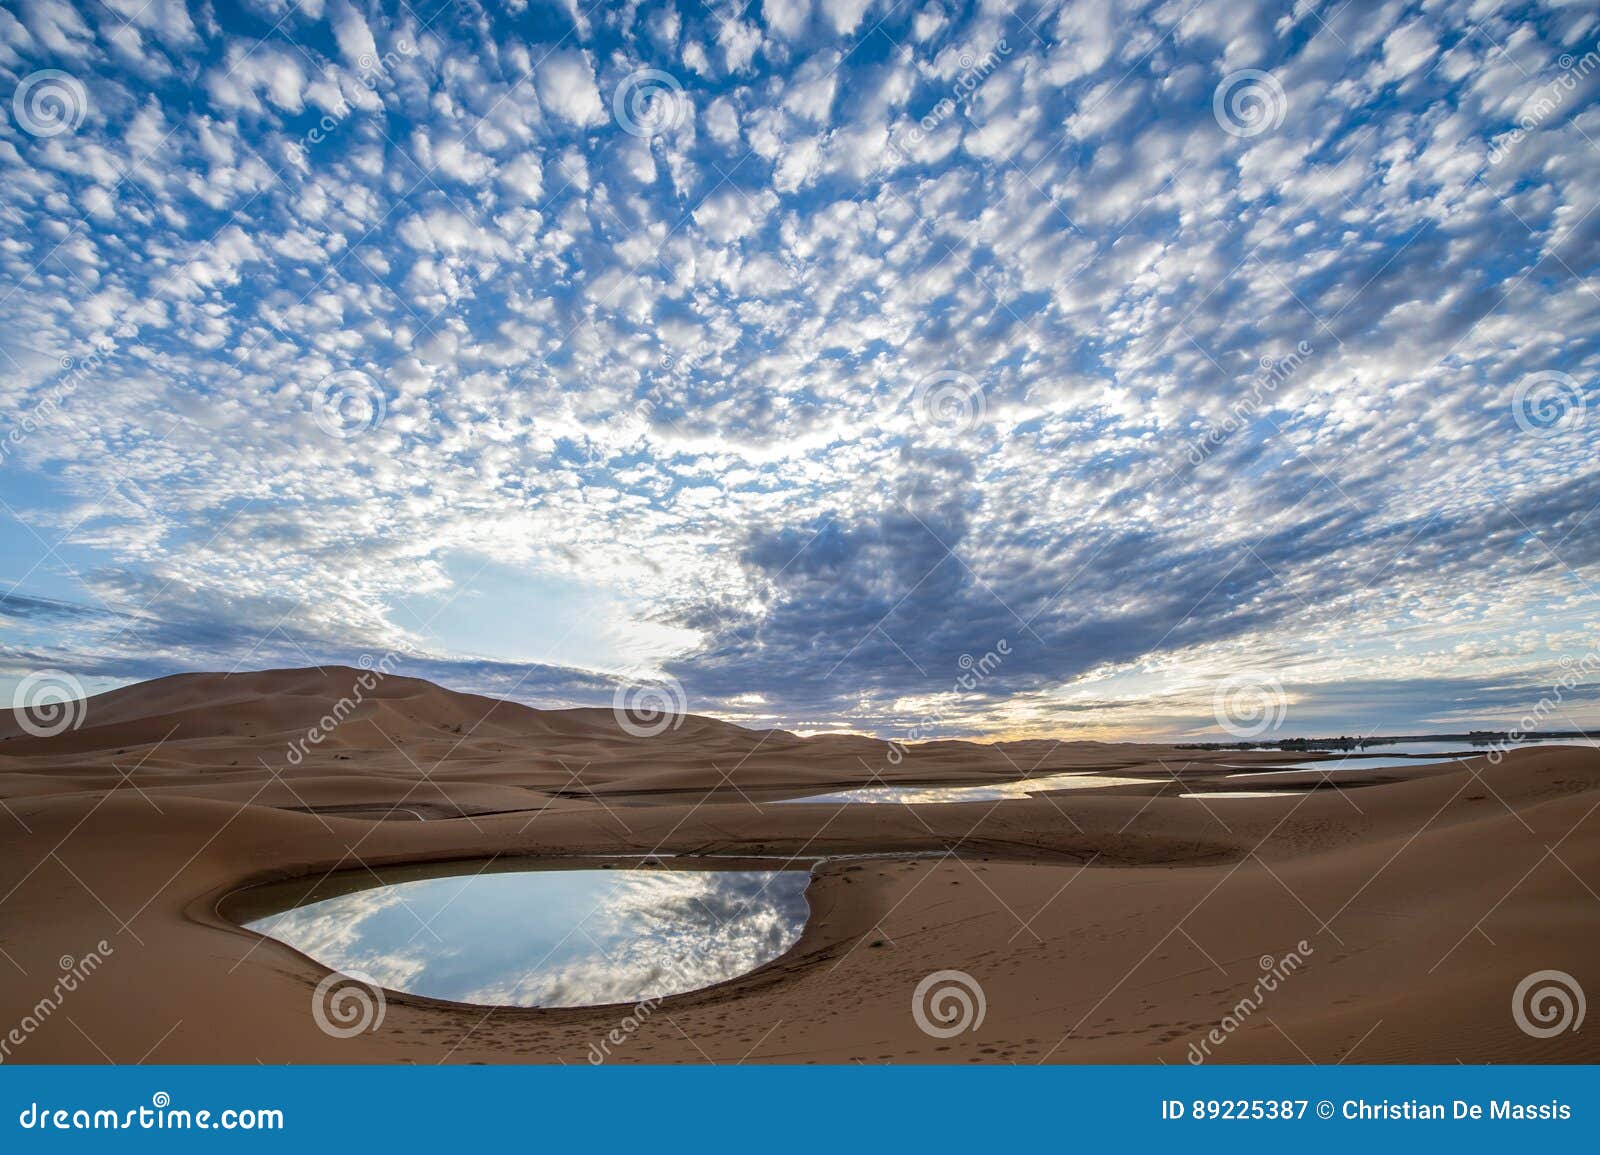 marocco mahamid desert 2